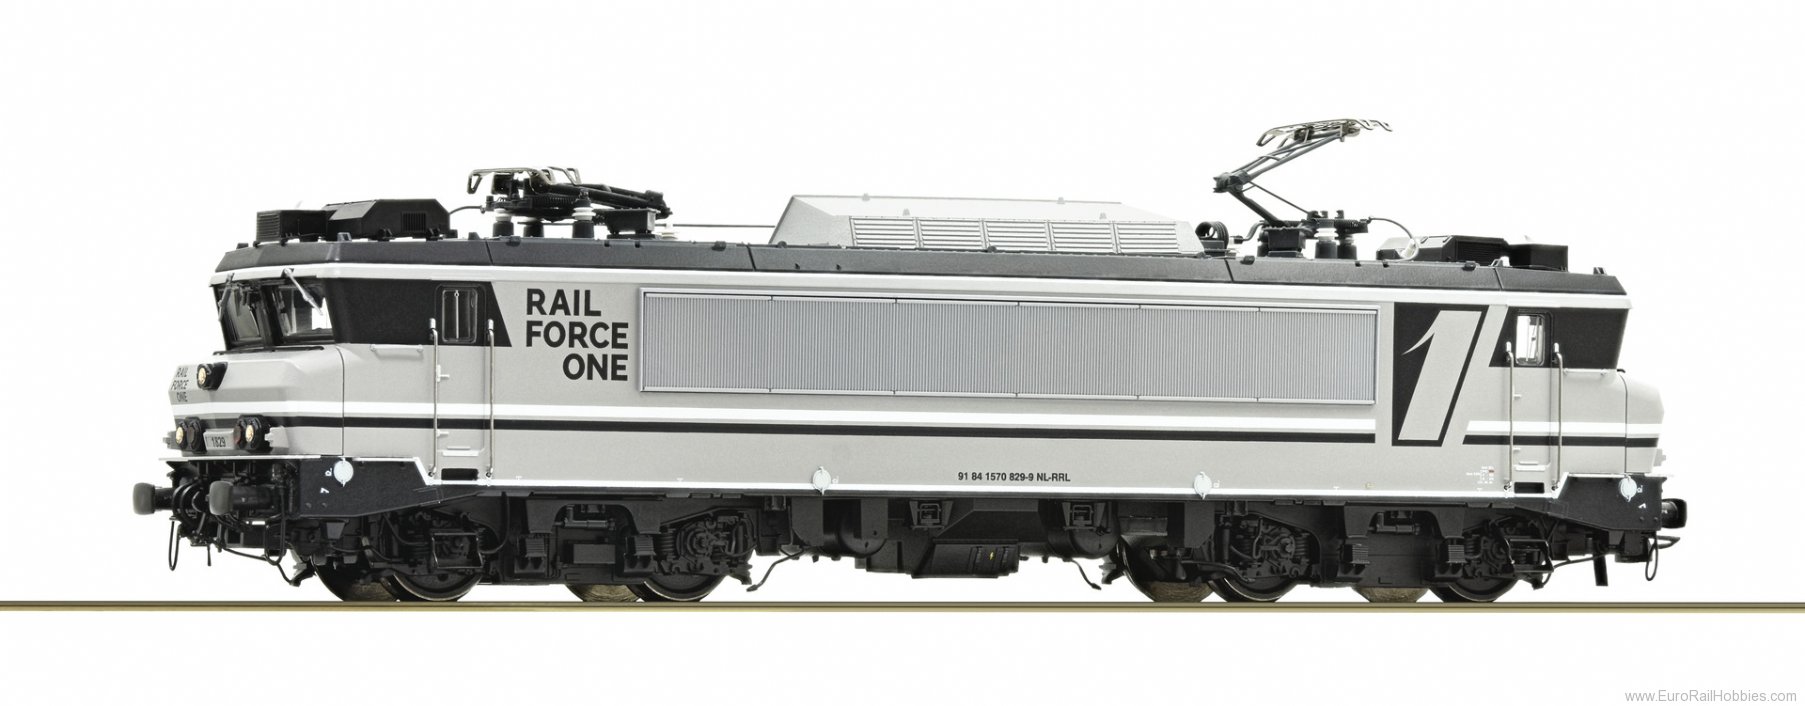 Roco 70164 Electric locomotive 1829, Rail Force One DCC 